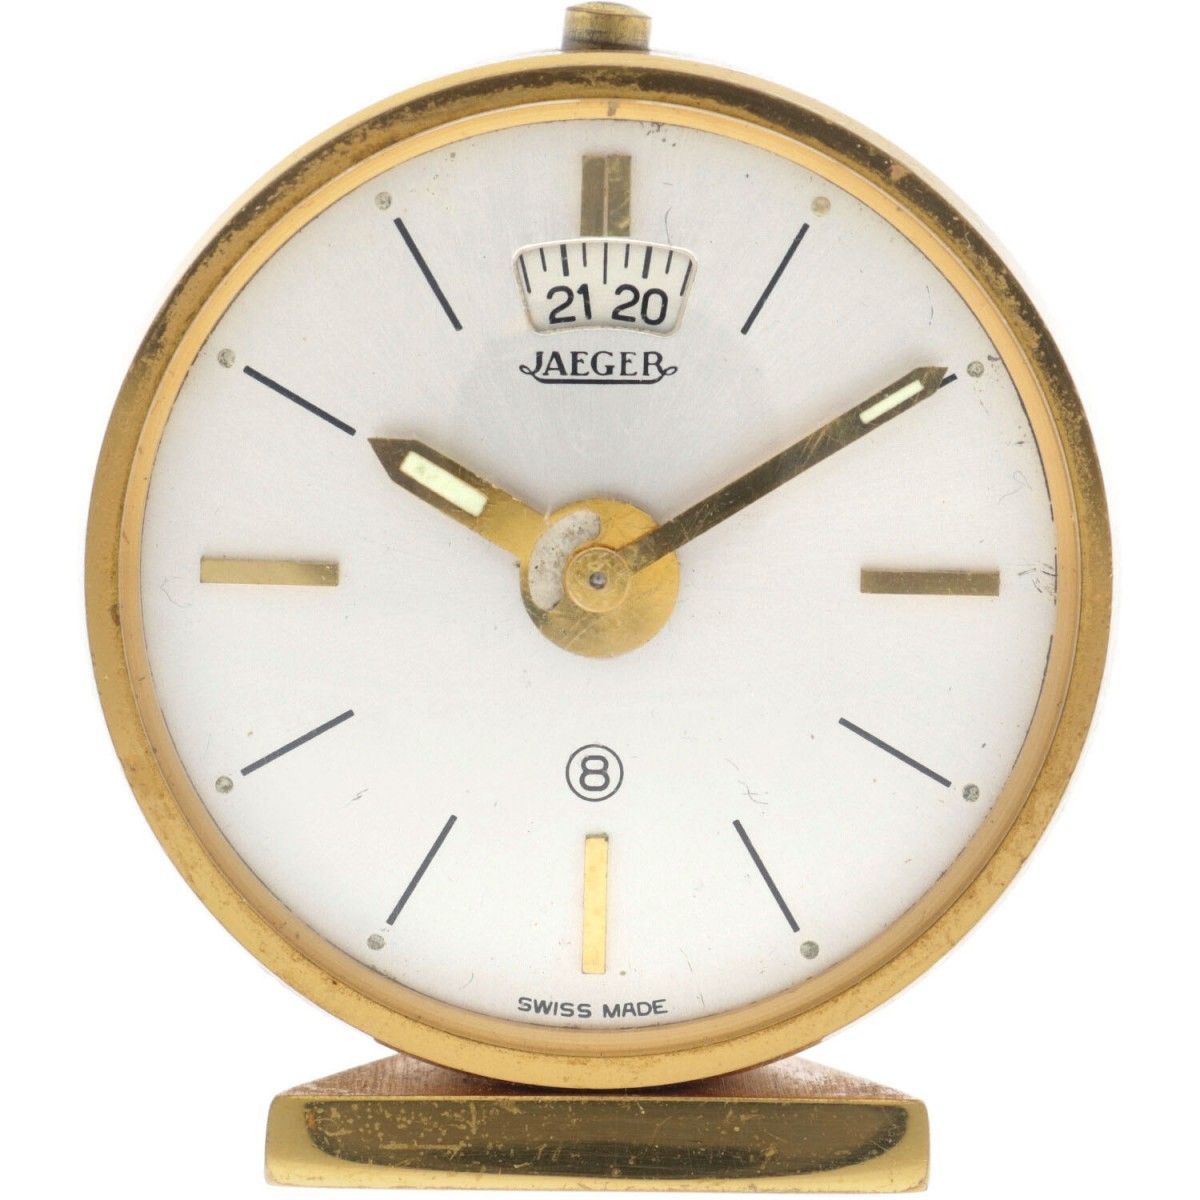 Jaeger LeCoultre travel clock appr. 1960 模拟AM-PM指示器 - 24小时报警 - 手动上链 - 机芯和报警器均正常工&hellip;